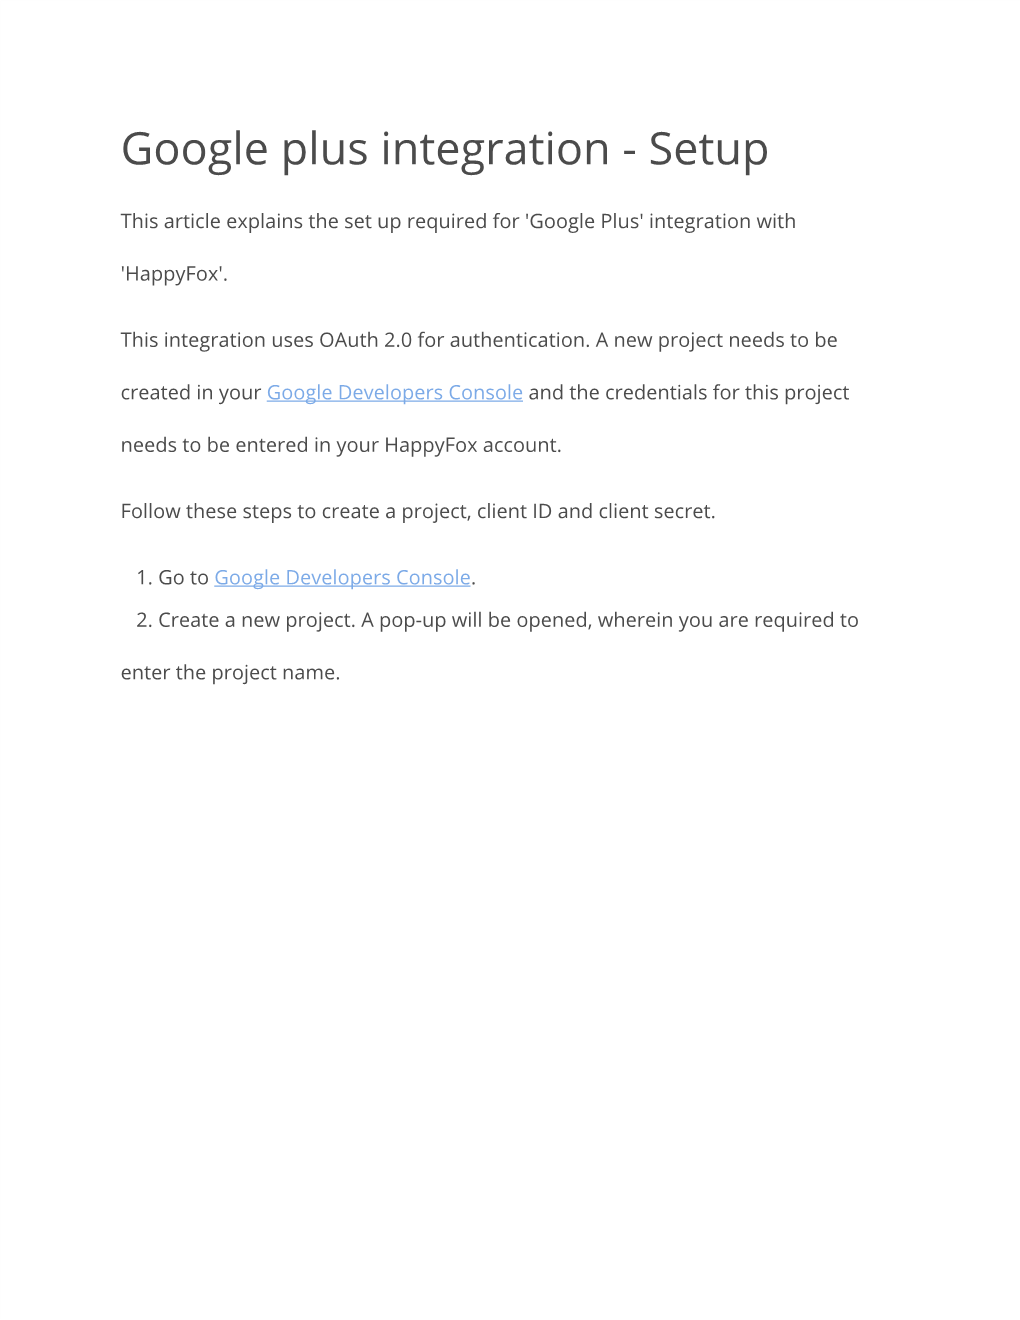 Google Plus Integration - Setup